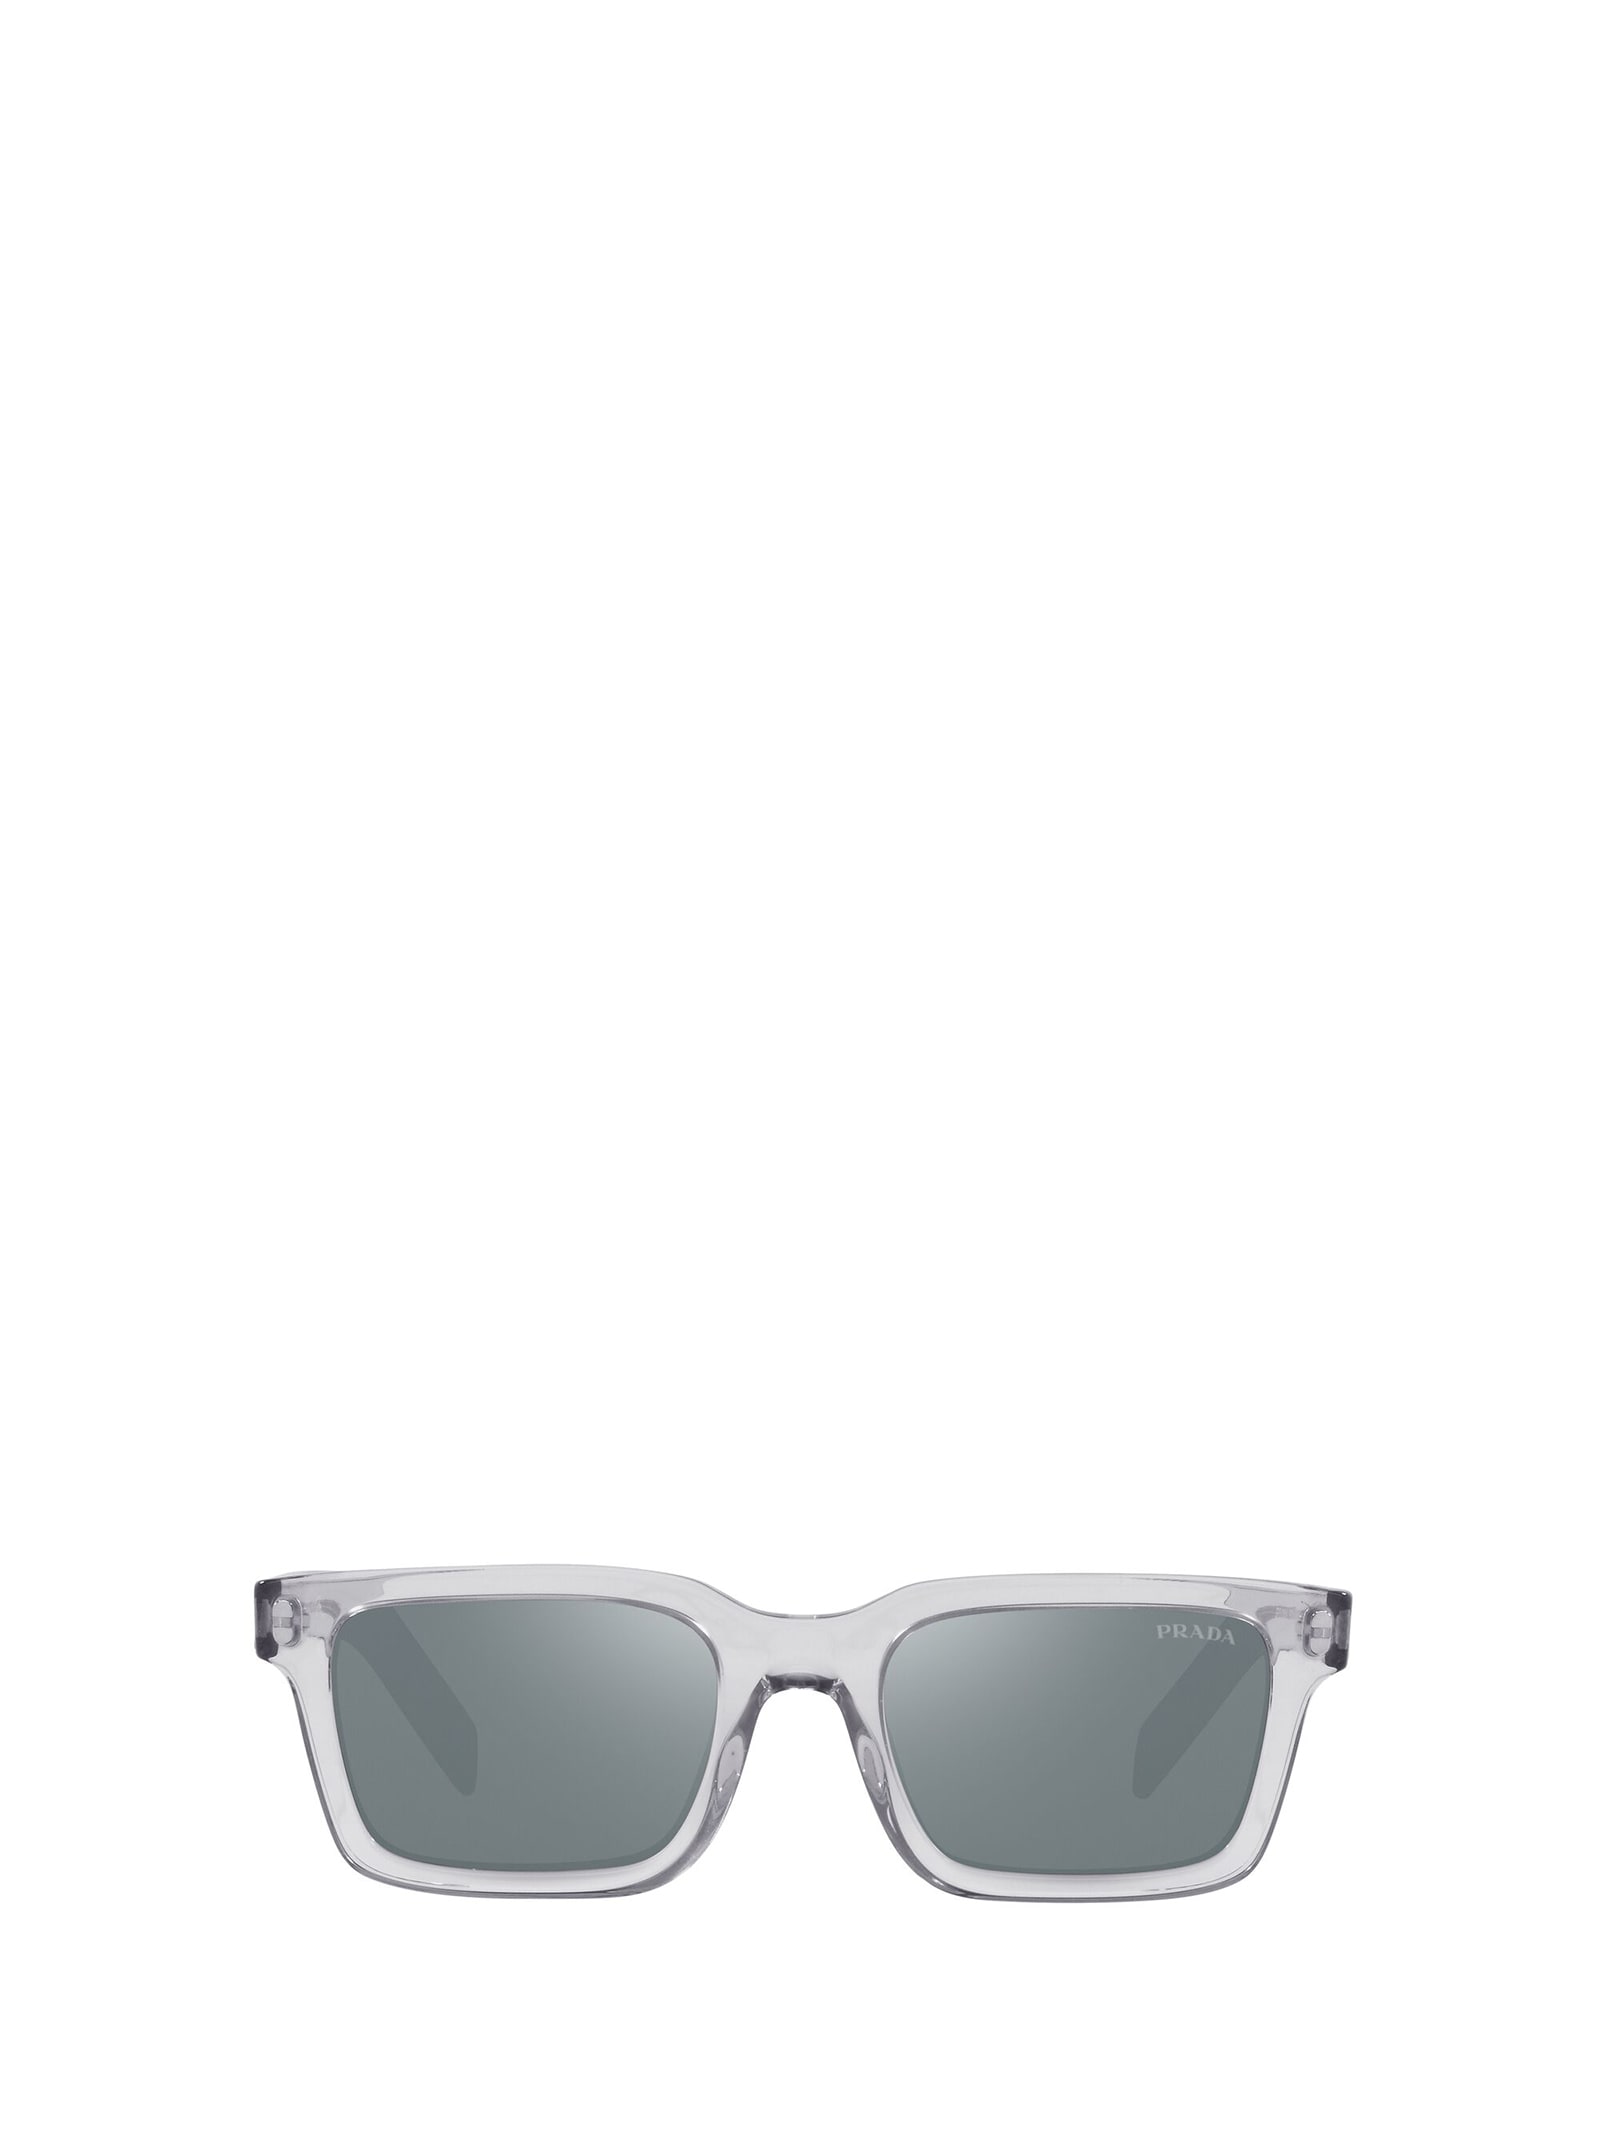 Prada Prada Pr 06ws Grey Crystal Sunglasses